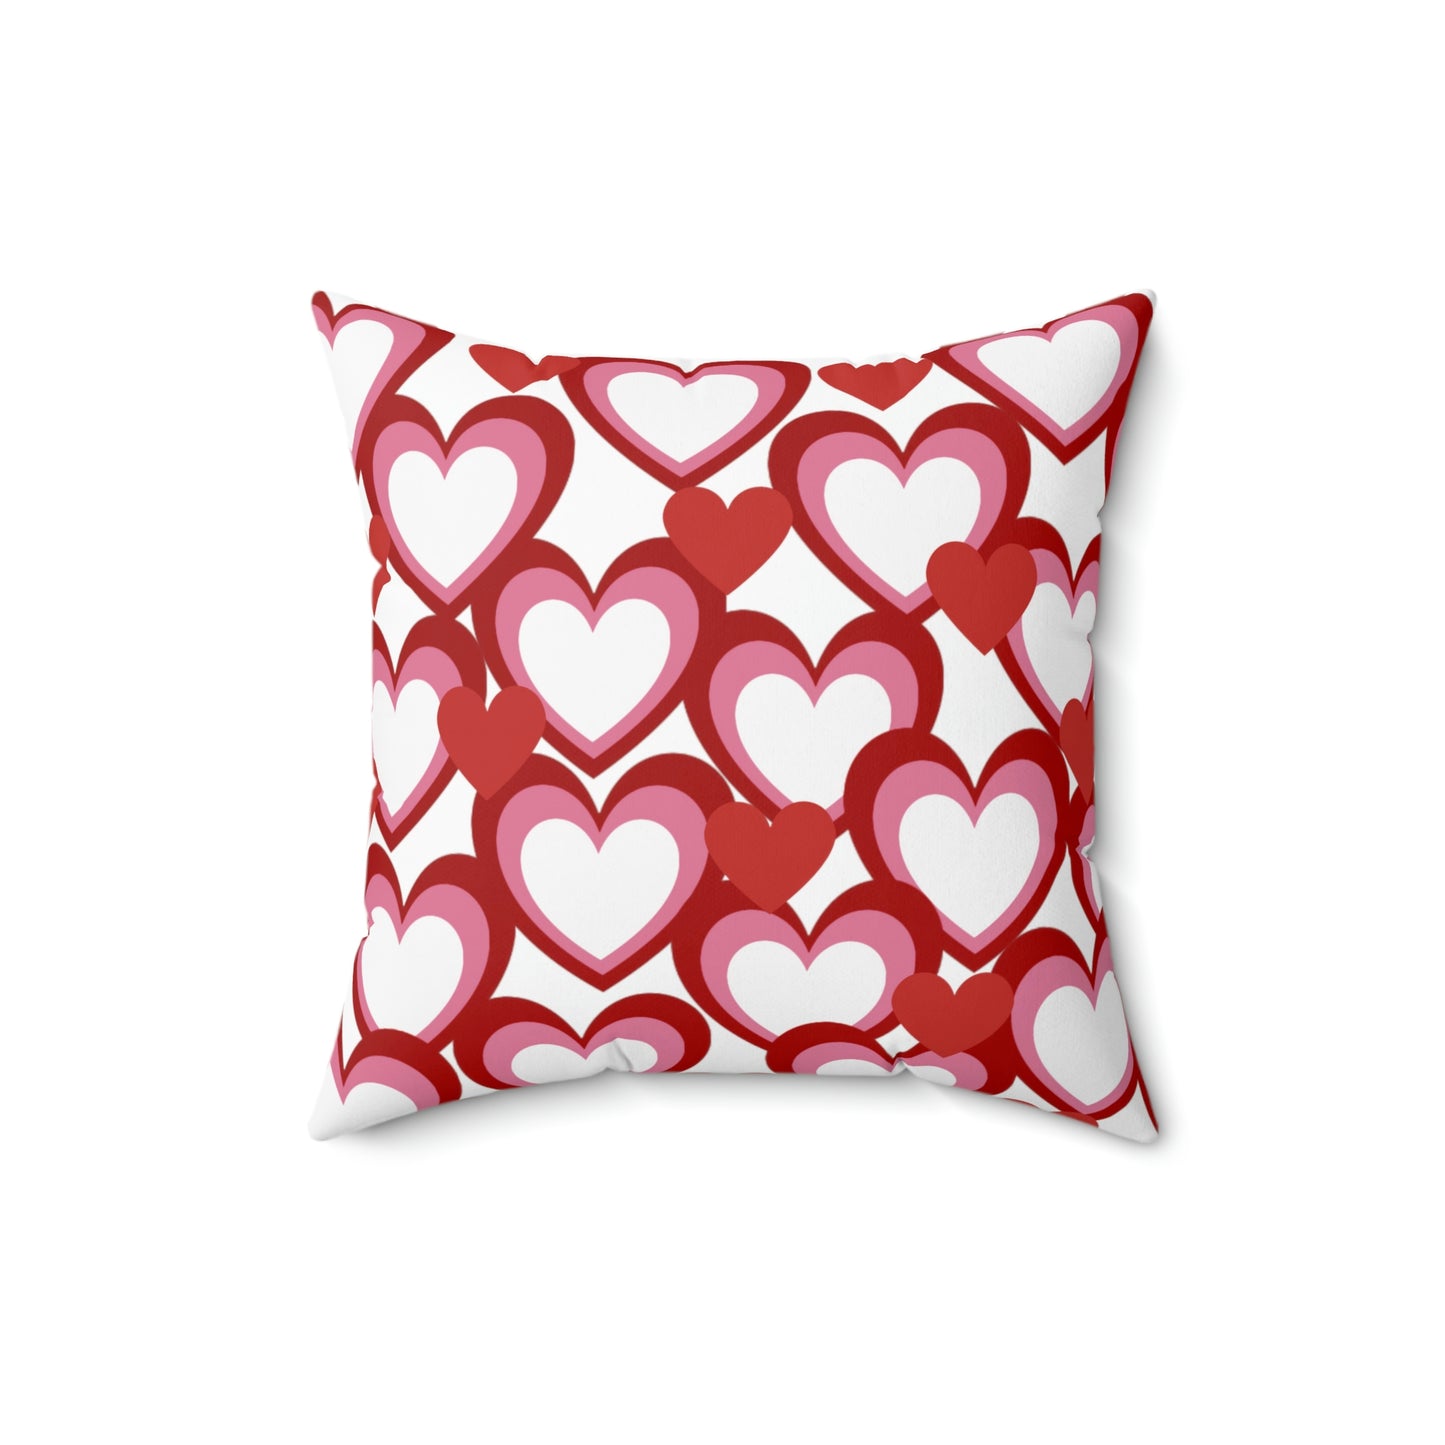 Valentine's Day Pillow / Valentine's Day Decor, Heart Pillow / Pink Decor, Red Heart Decor / Valentine's Day Gift